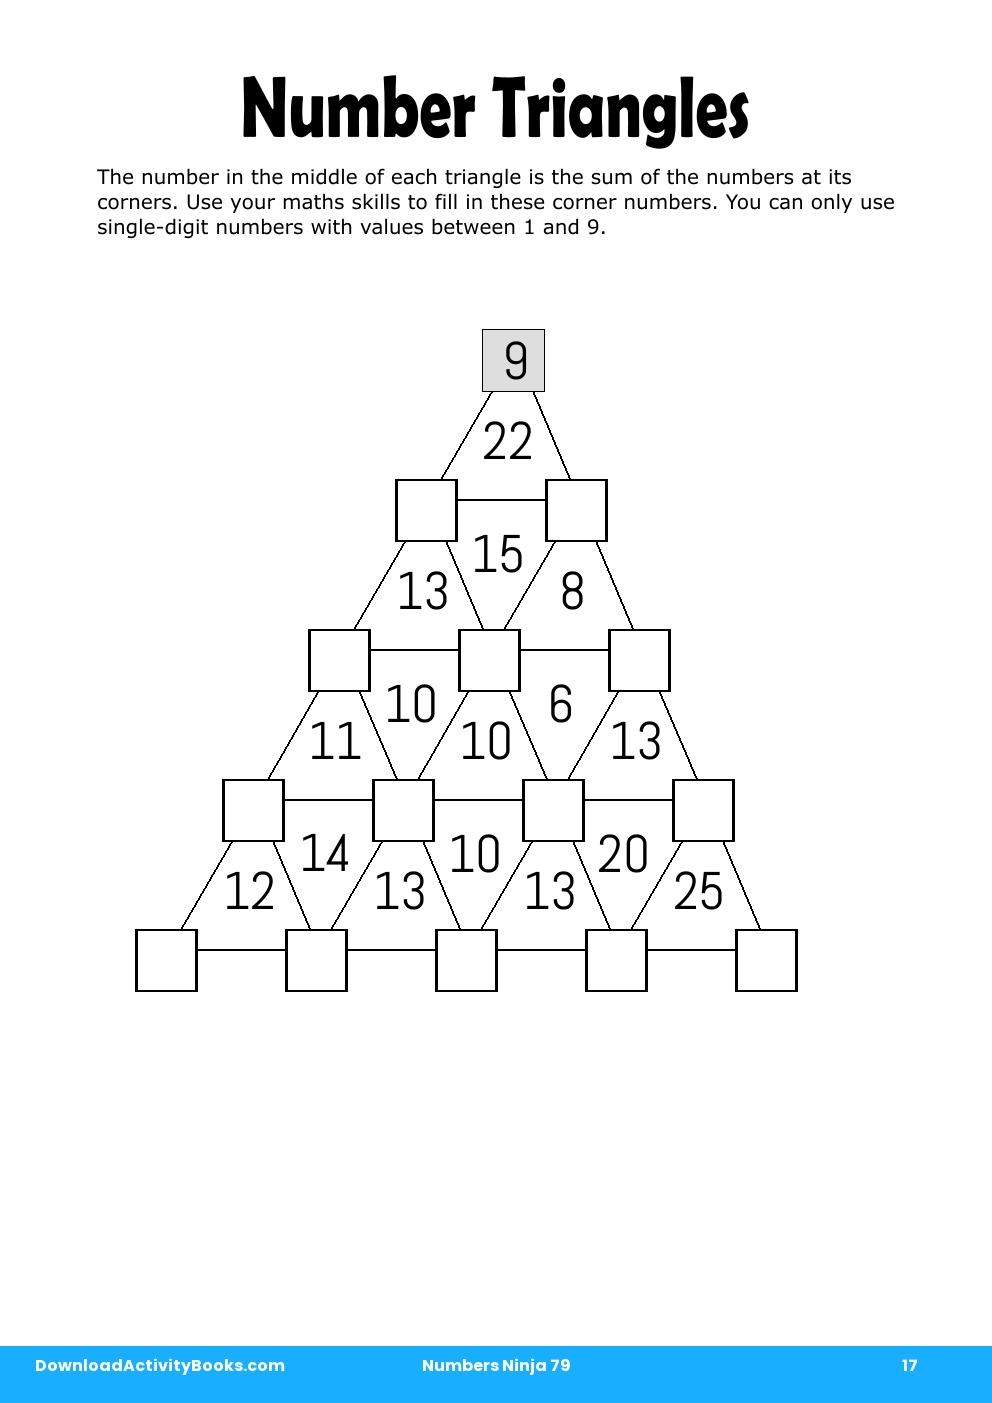 Number Triangles in Numbers Ninja 79